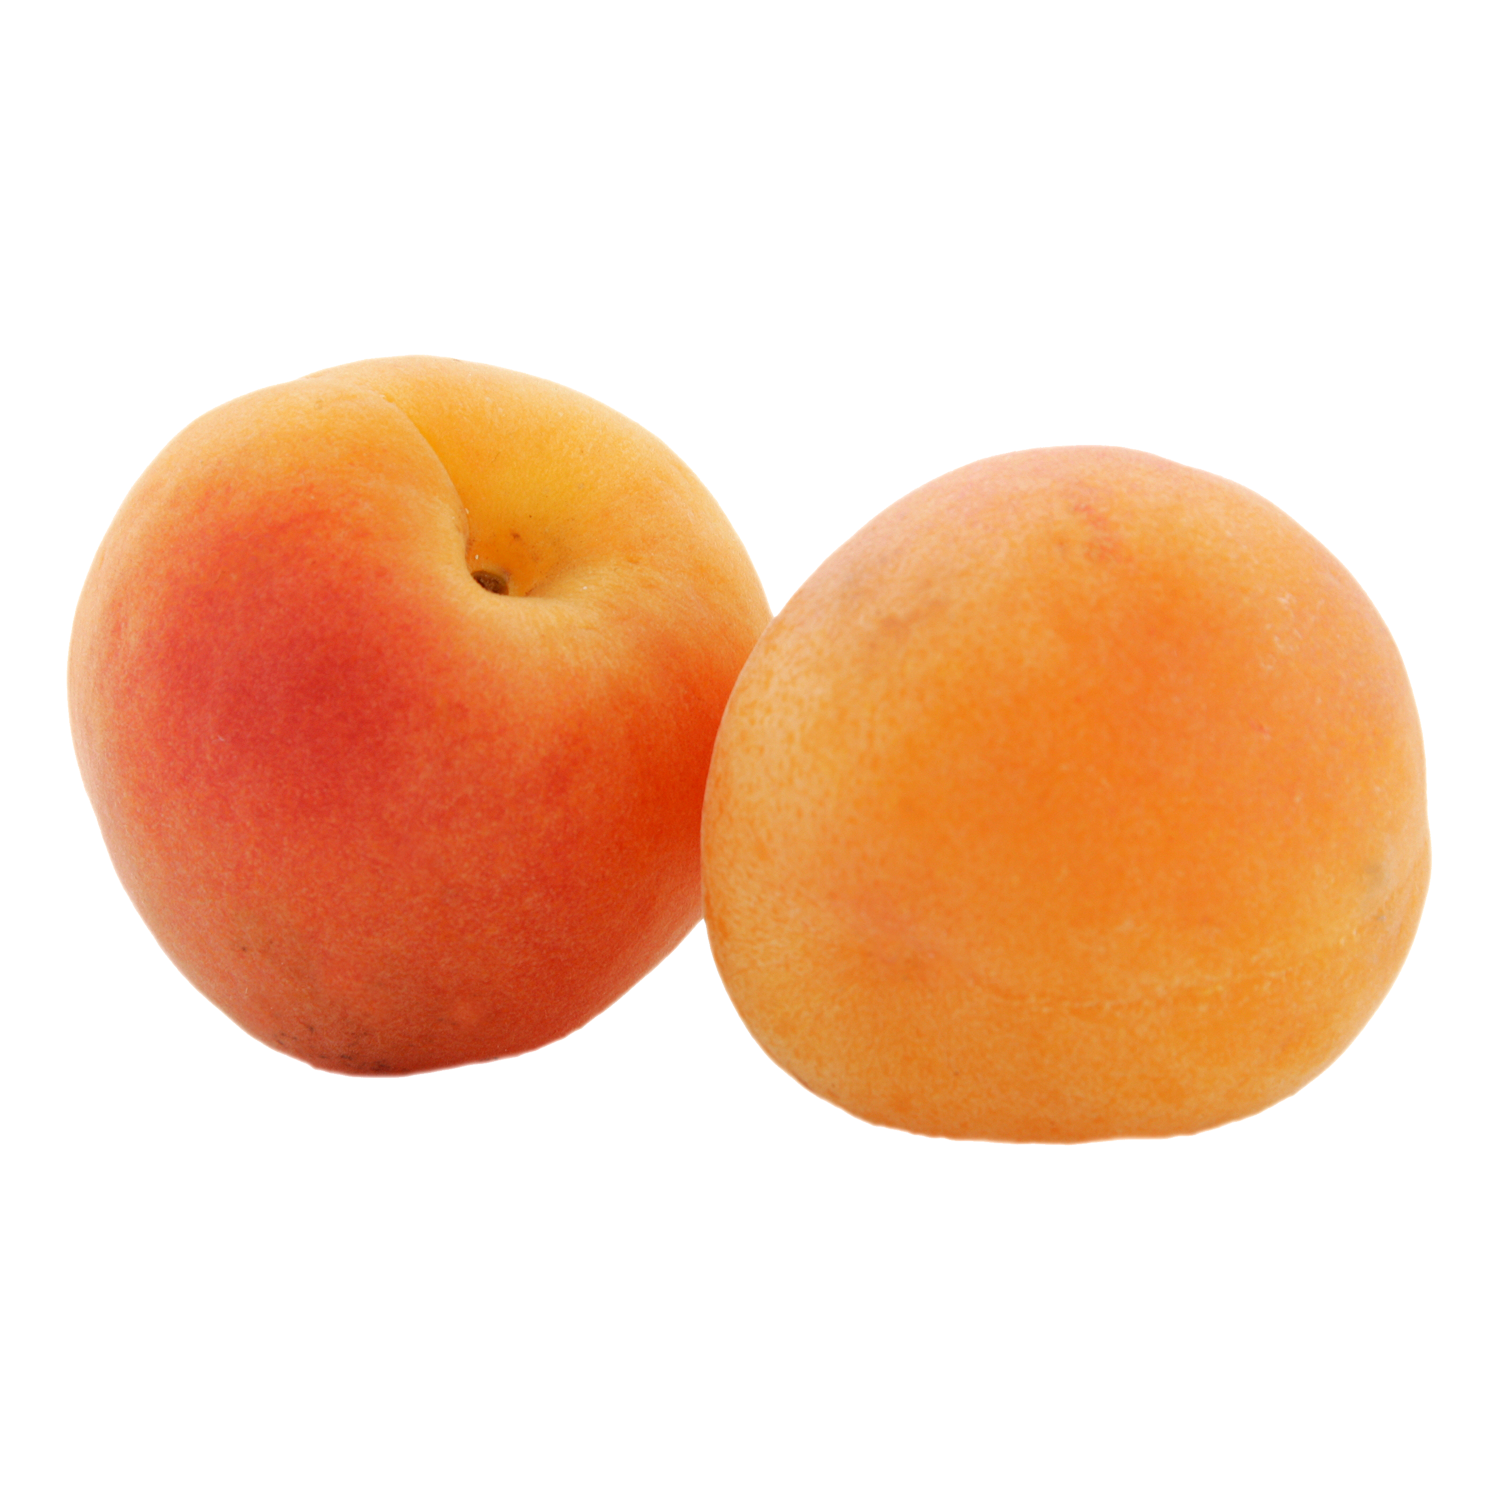 Apricot Transparent Image